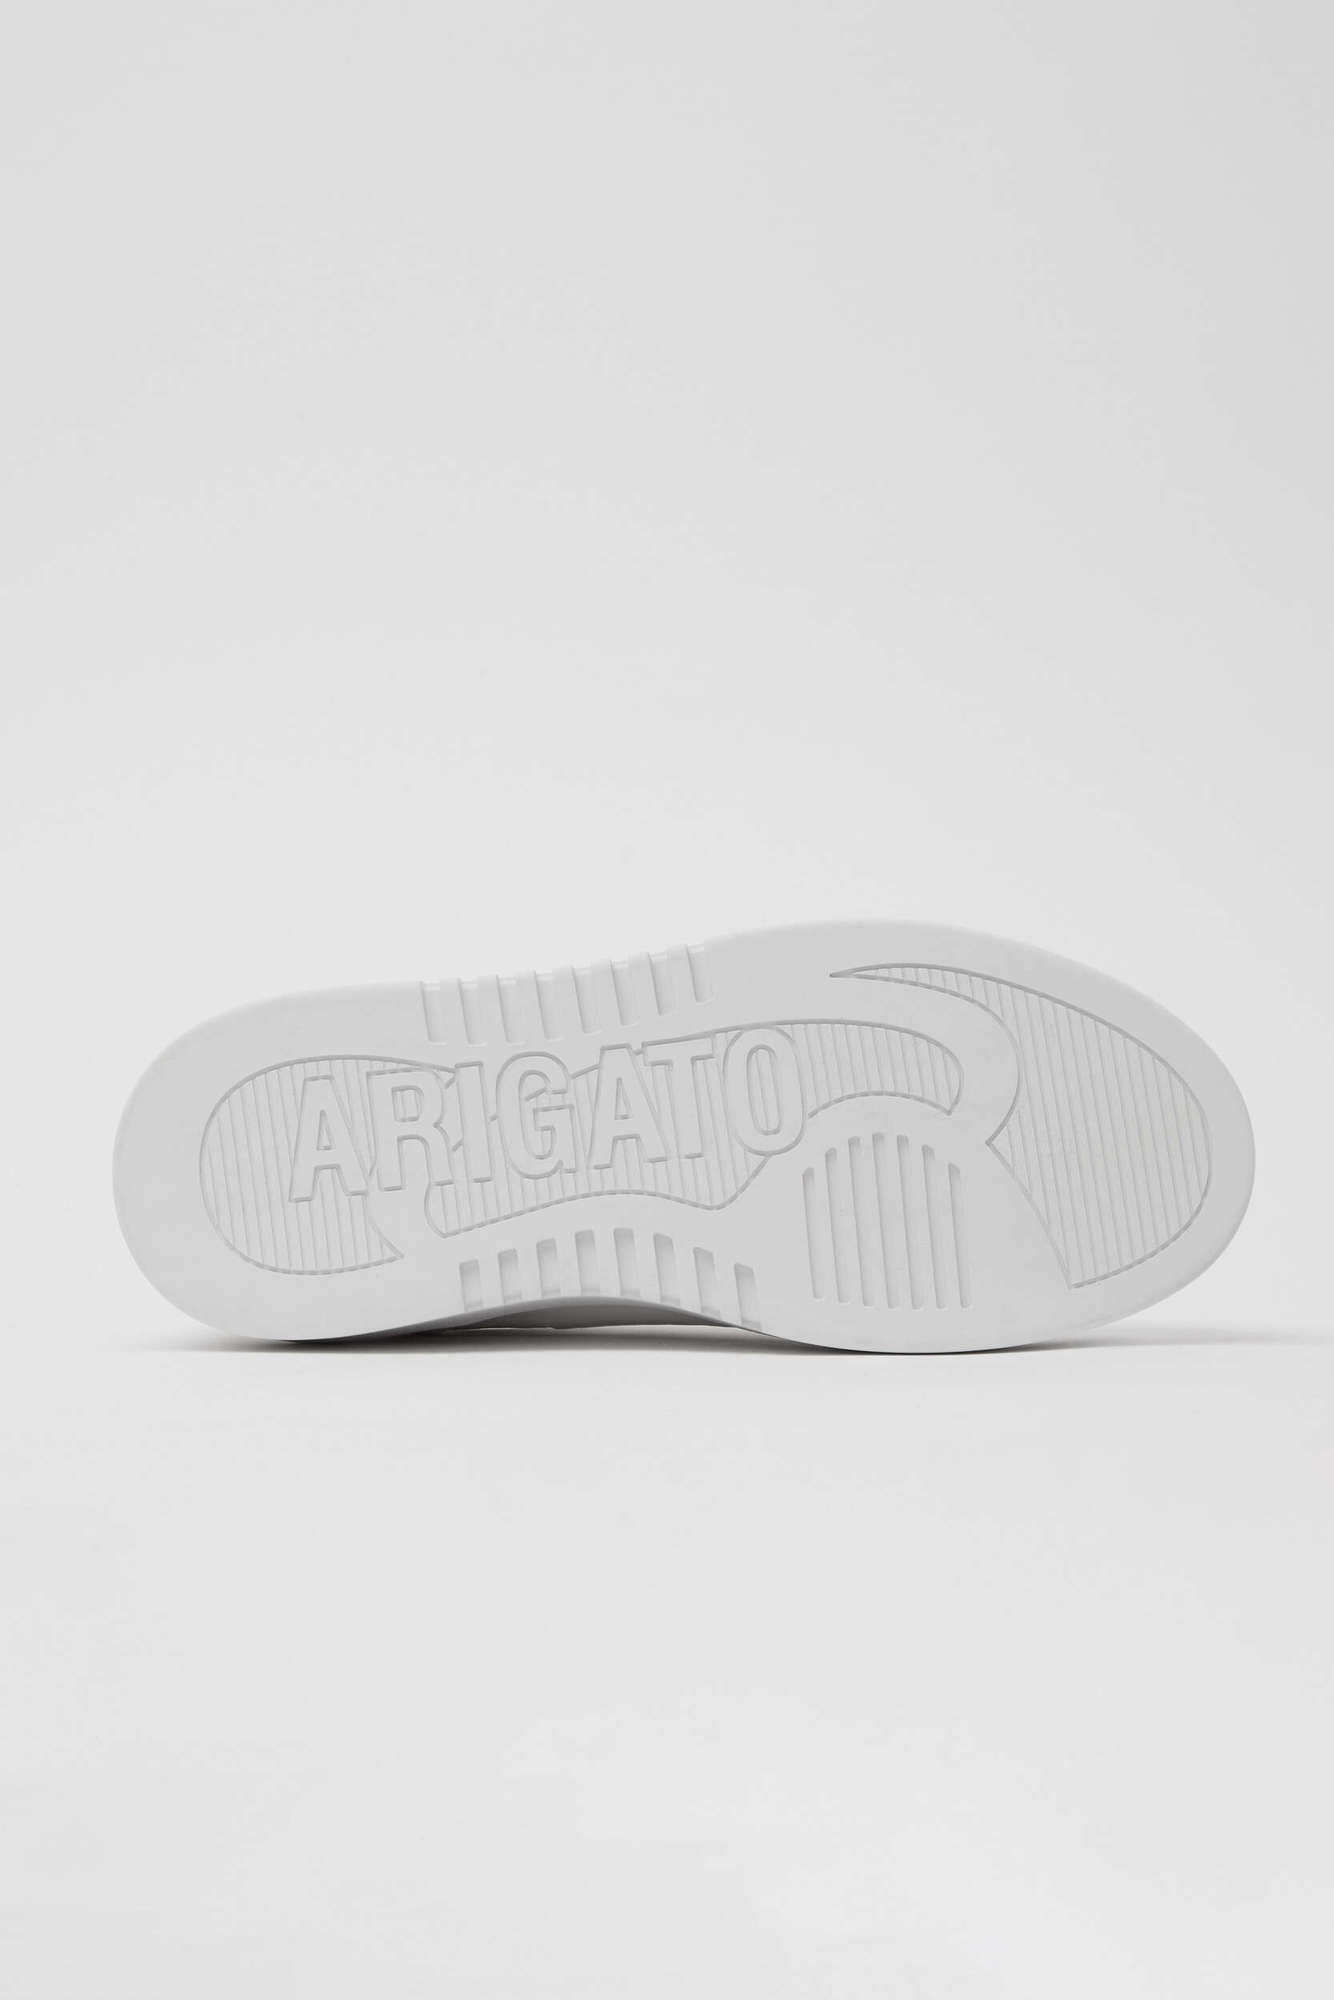 AXEL ARIGATO Orbit Vintage Sneaker in White 46